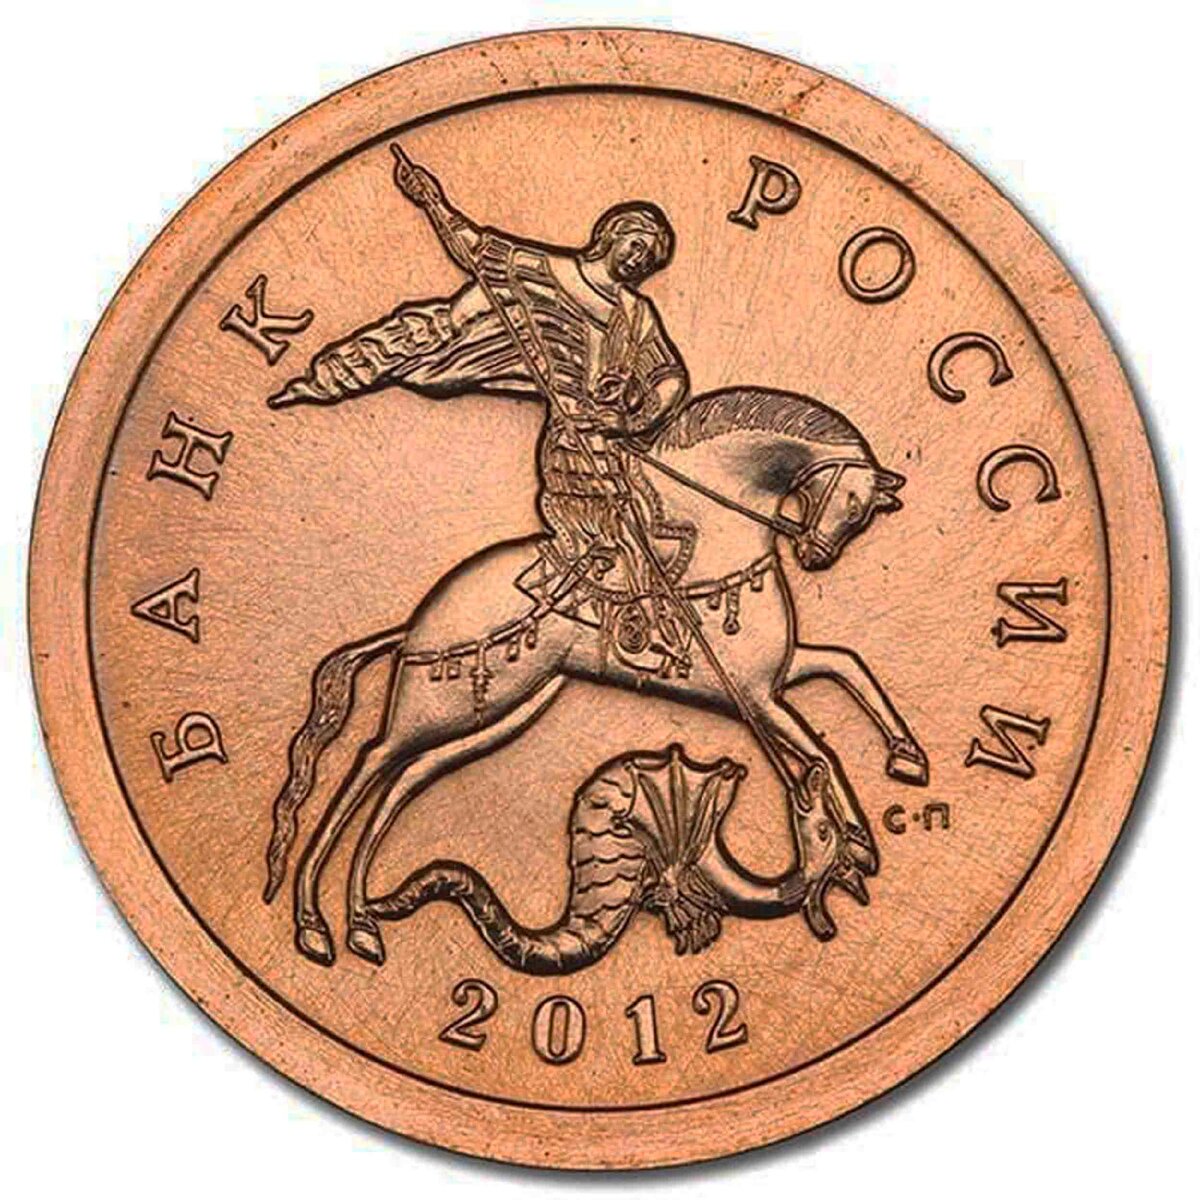 Монеты 10 копеек сп. 1 Копейка 2011 года. Монета 1 копейка. Монета 10 копеек СП 2011.